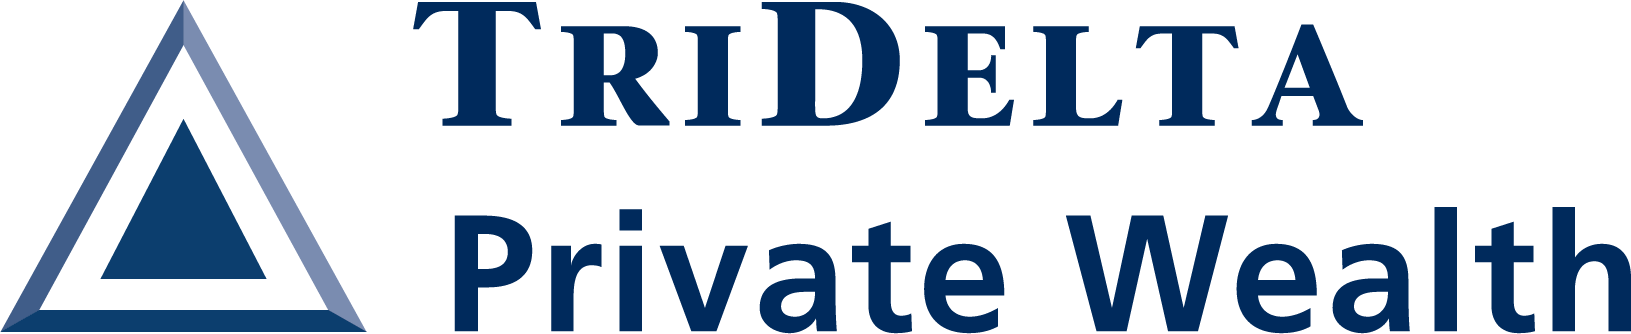 TriDelta Private Wealth horizontal logo_blue